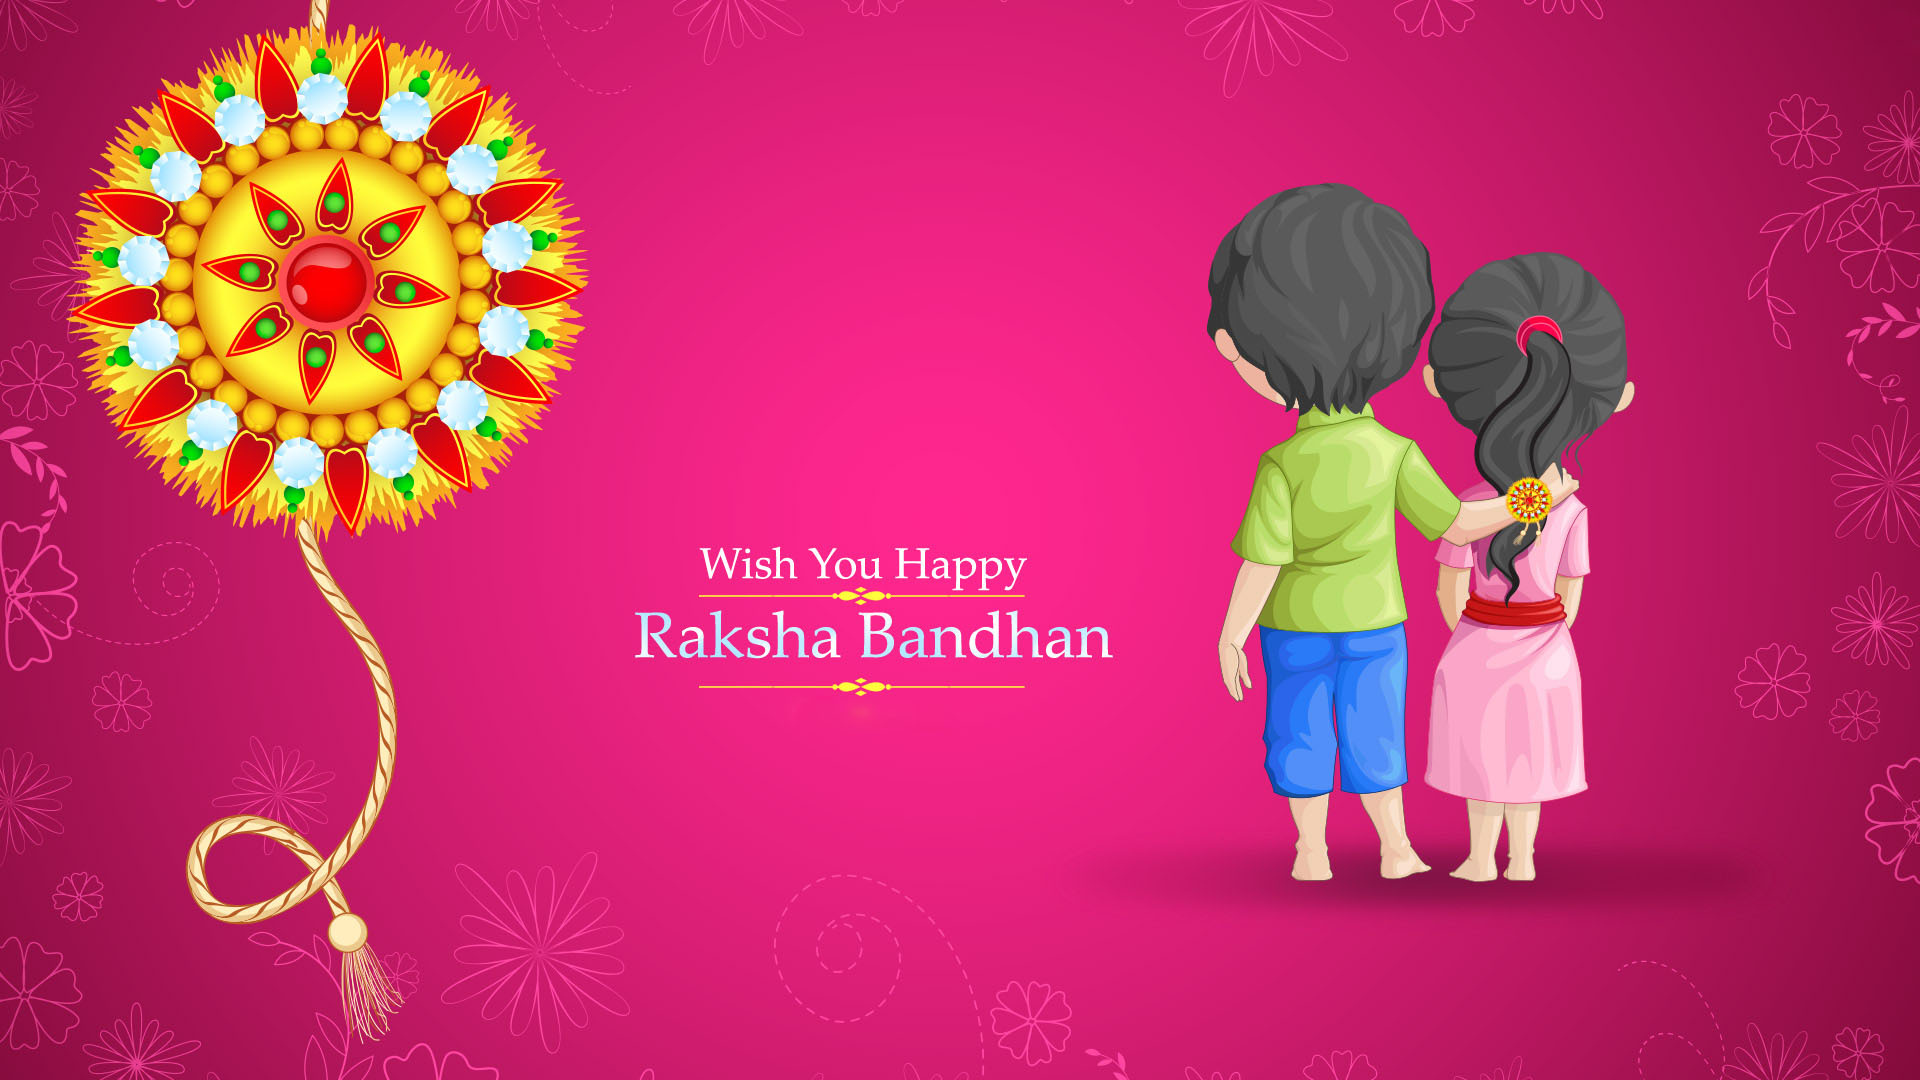 Happy Raksha Bandhan Images HD, Wallpapers for Whatsapp DP – Free Download 